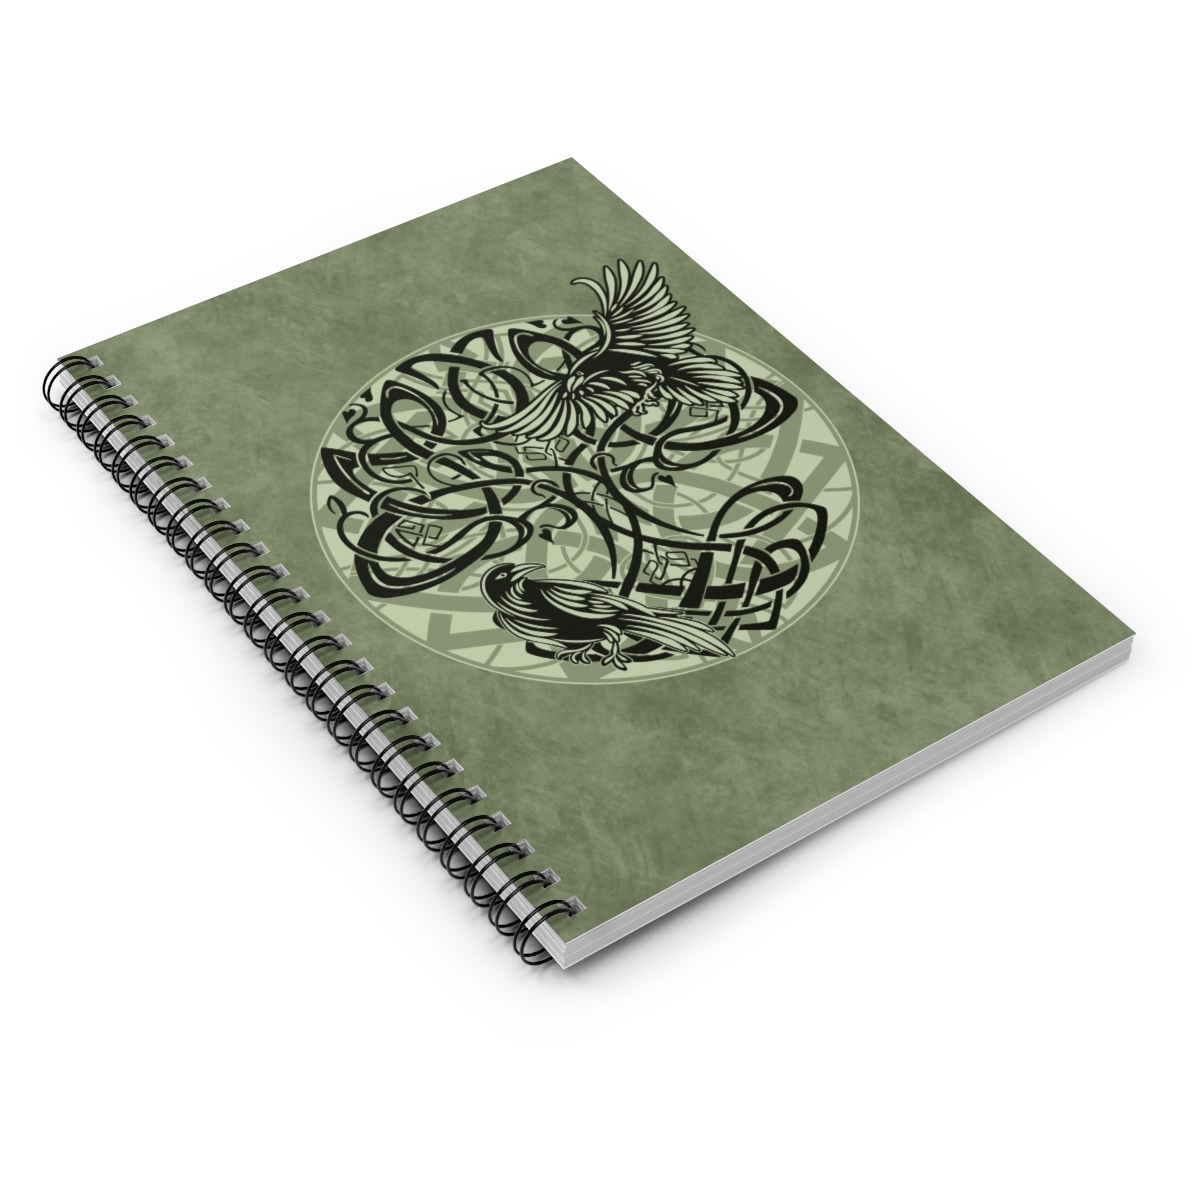 Green Yggdrasil Ravens Ruled Line Spiral Notebook